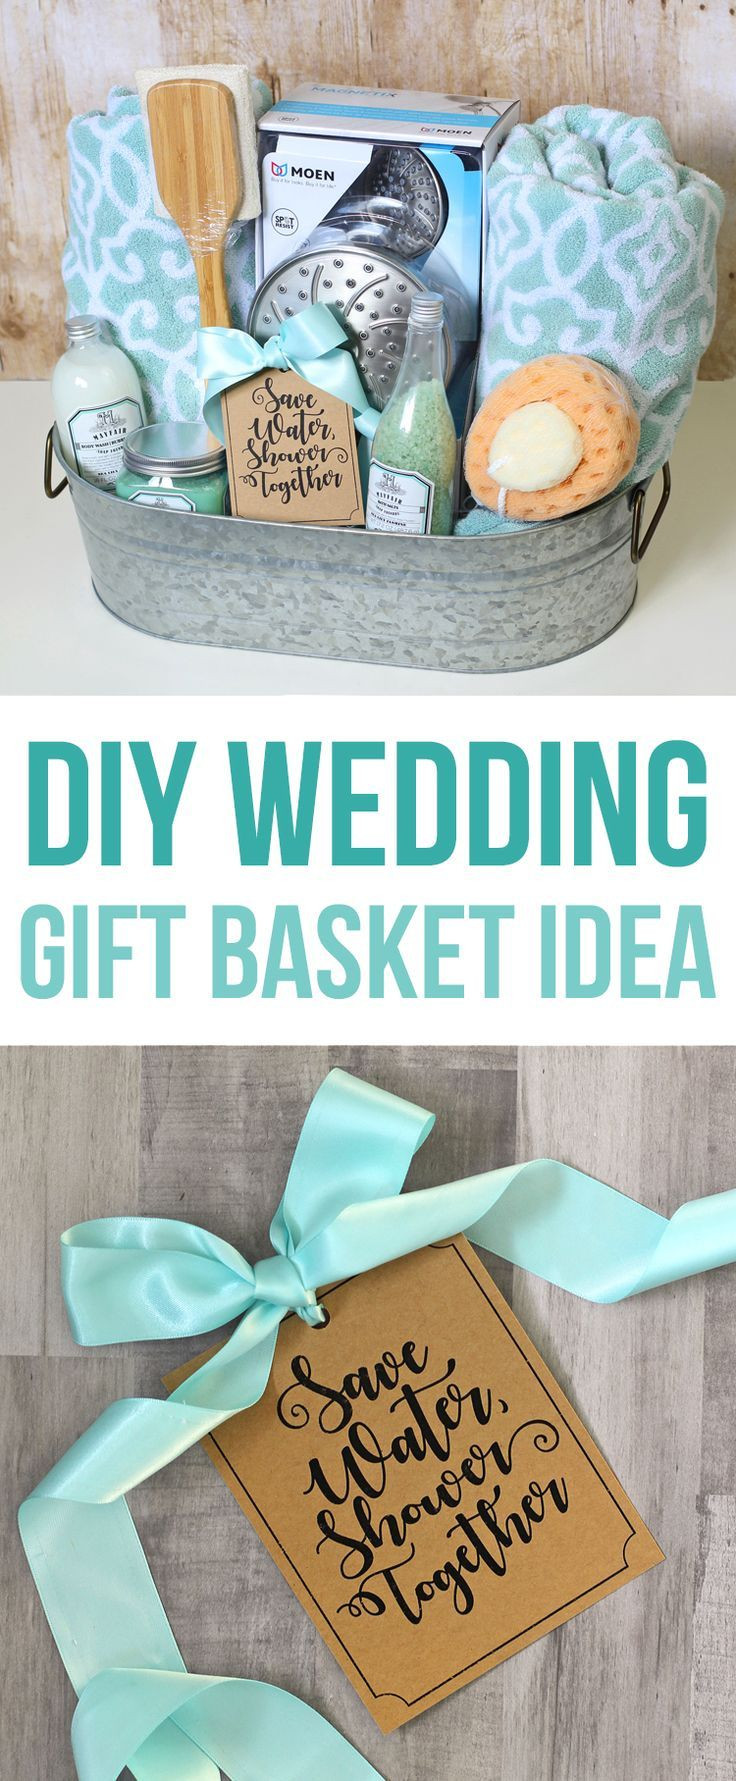 DIY Wedding Gift Basket
 This DIY wedding t basket idea has a shower theme and